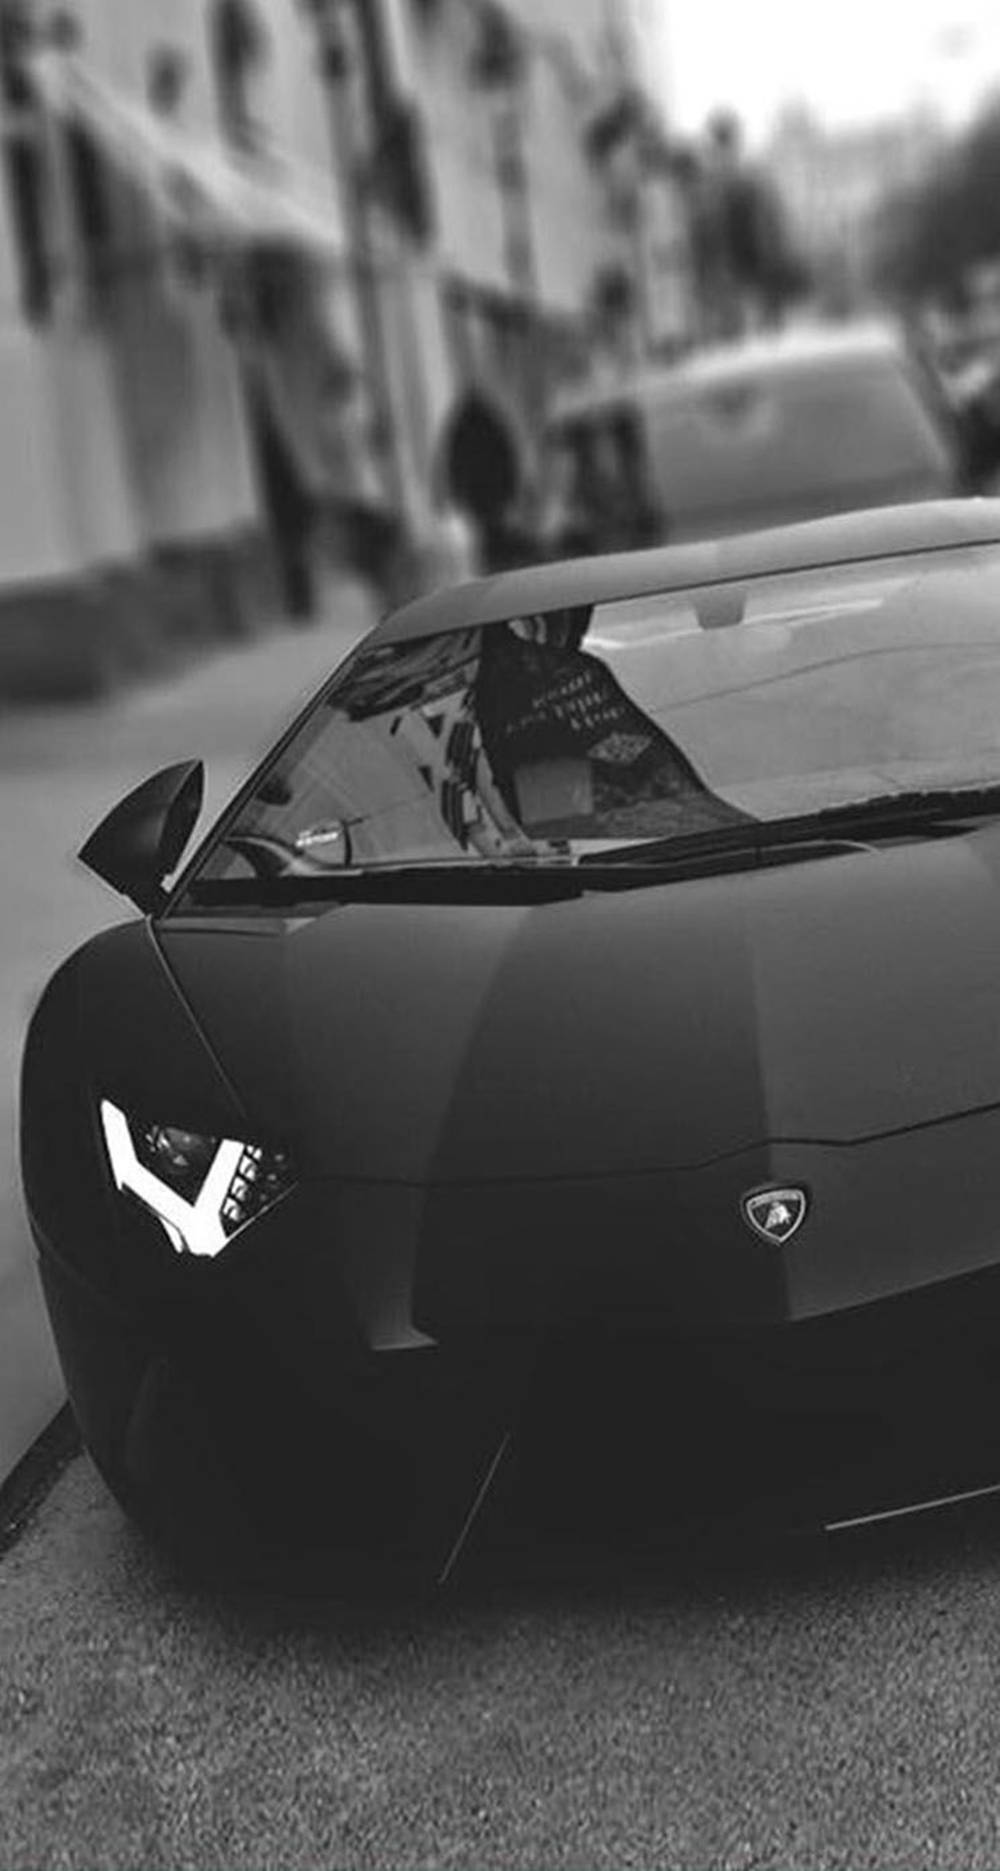 Sleek Lamborghini Iphone Case On Sidewalk Background